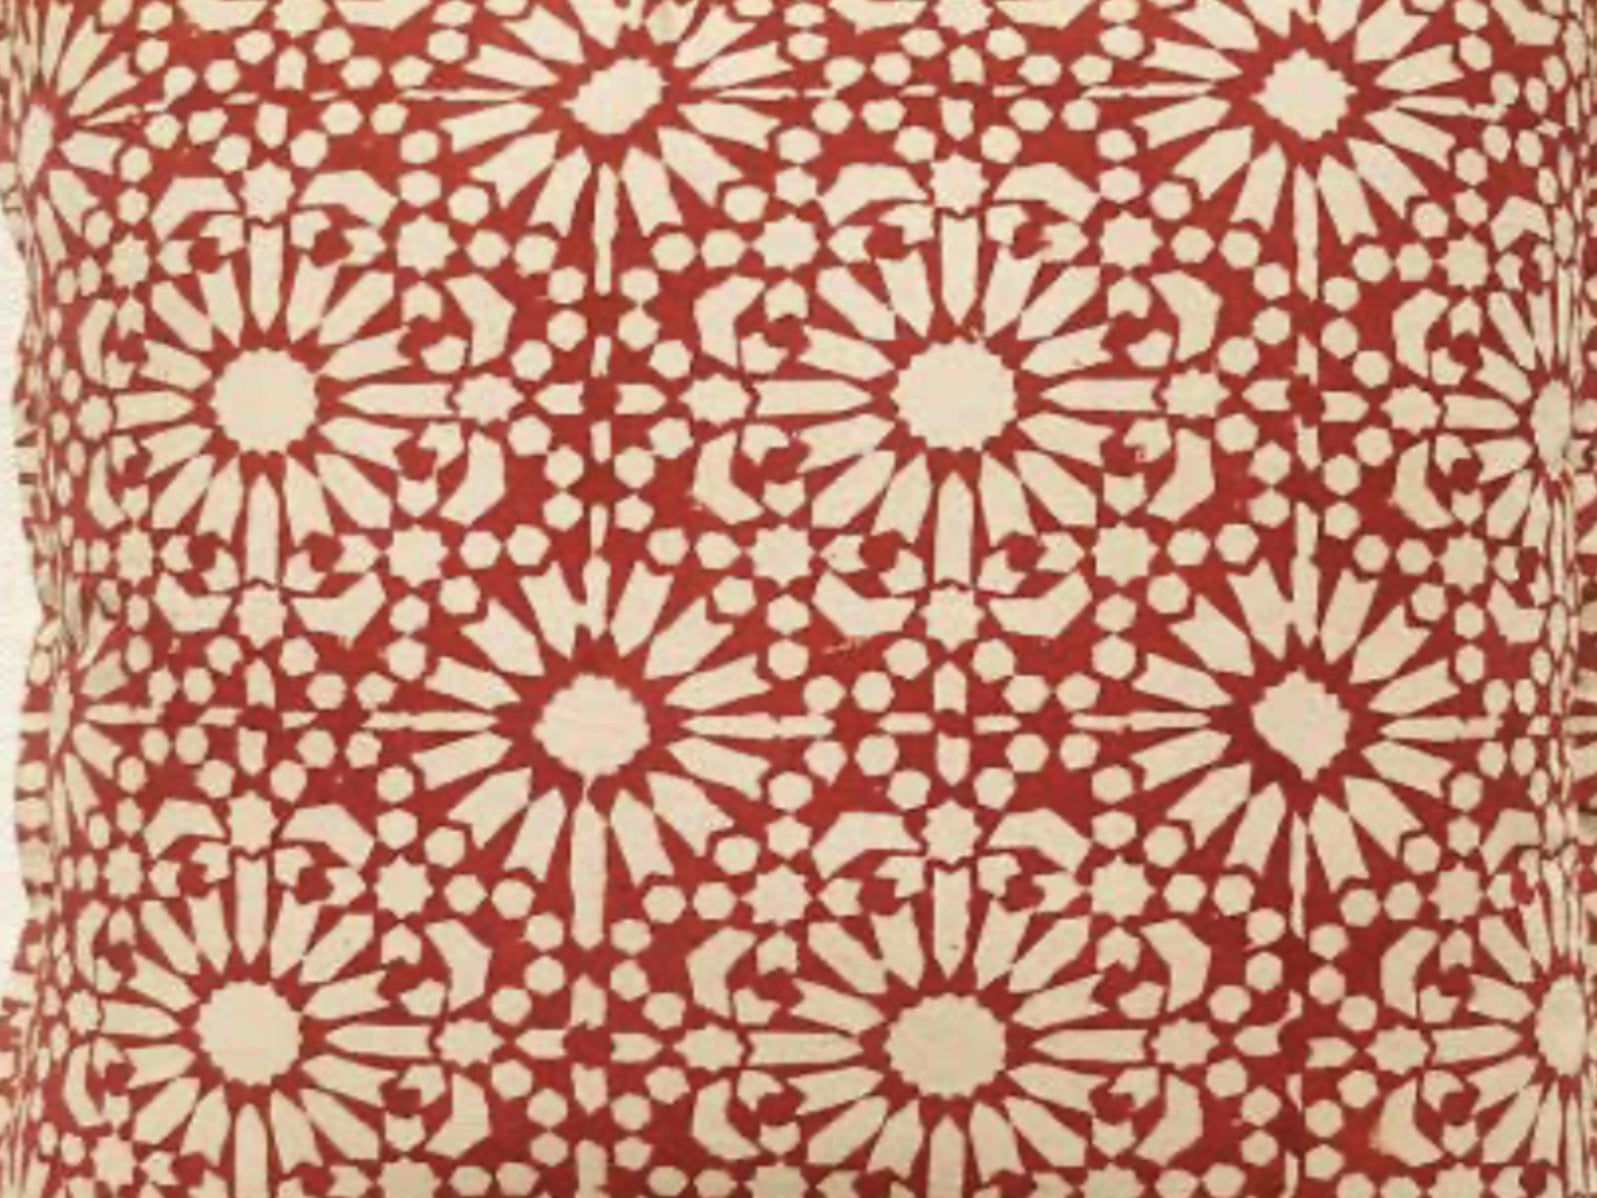 Handblock Printed Tablecloth - Red Fireworks